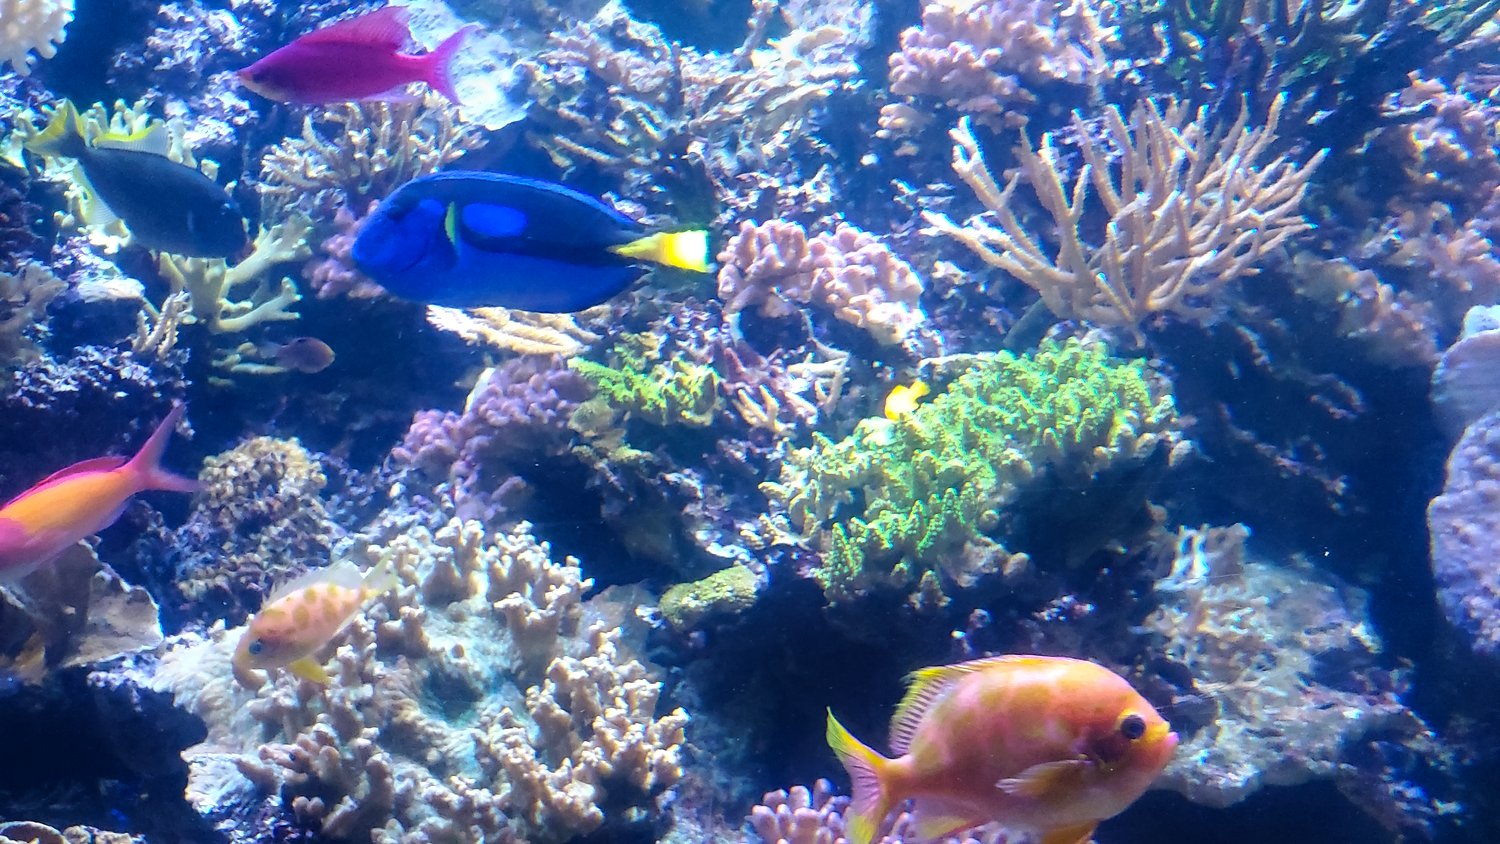 Saltwater display at Shedd Aquarium.